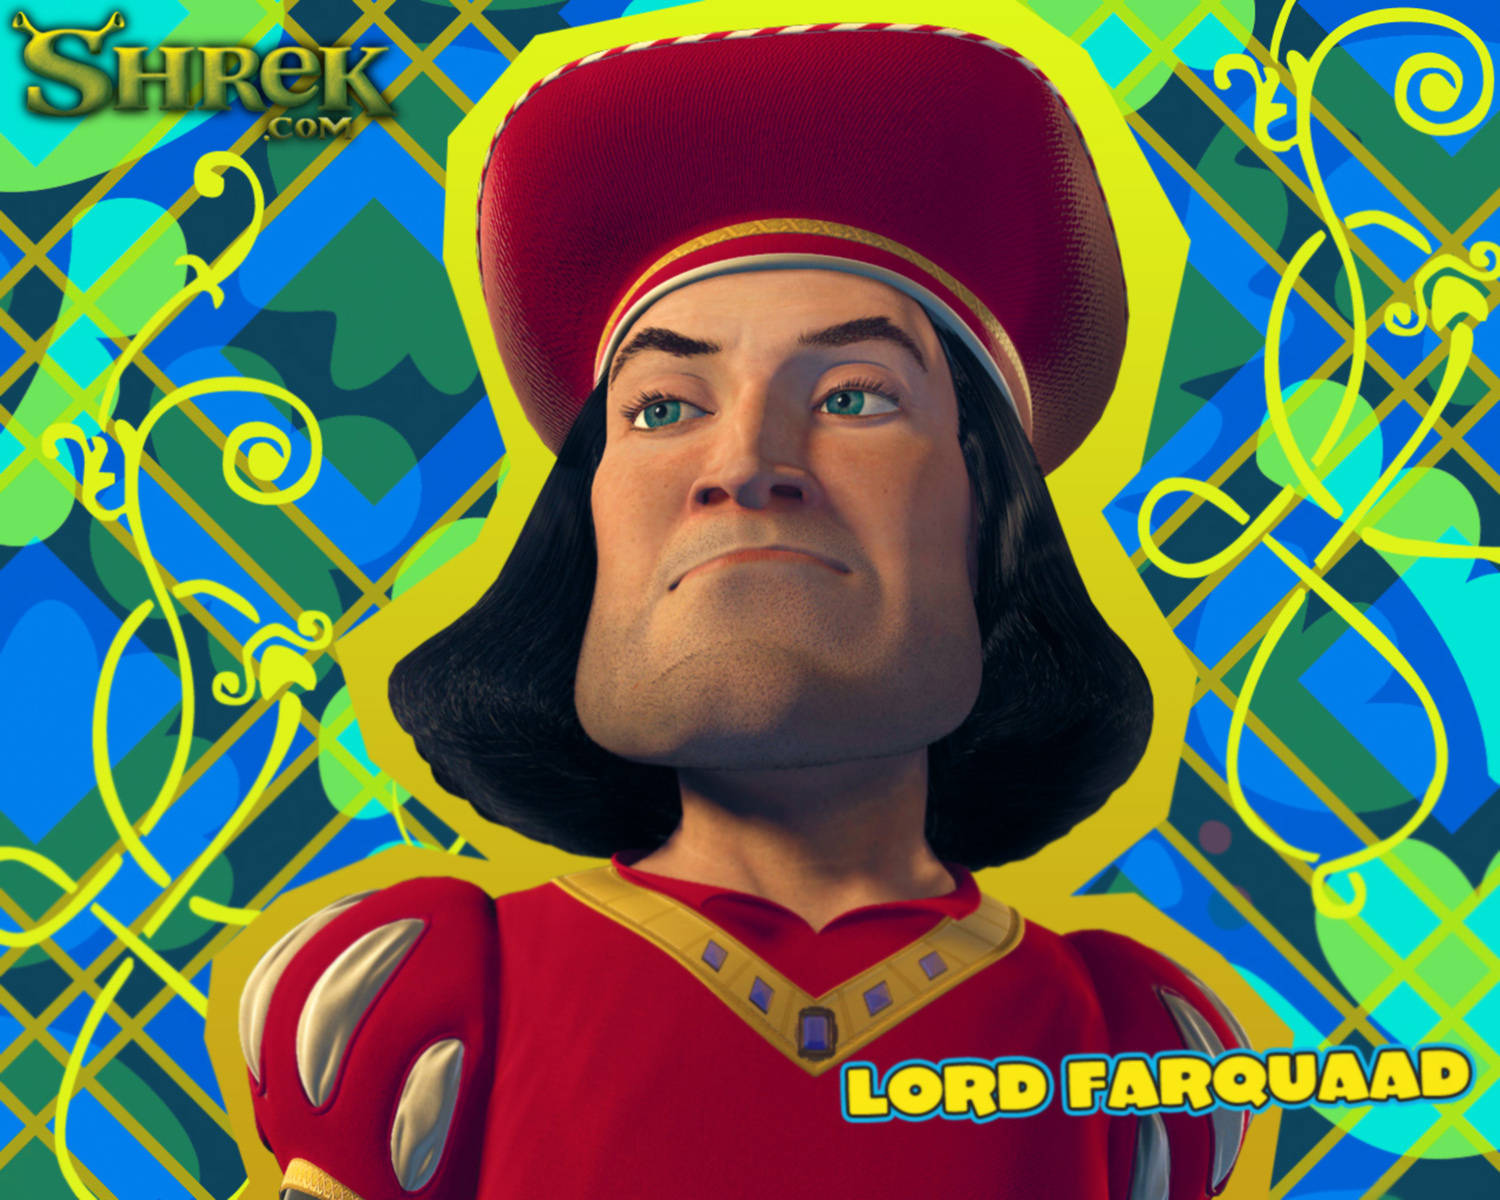 Top 999+ Lord Farquaad Wallpaper Full HD, 4K Free to Use